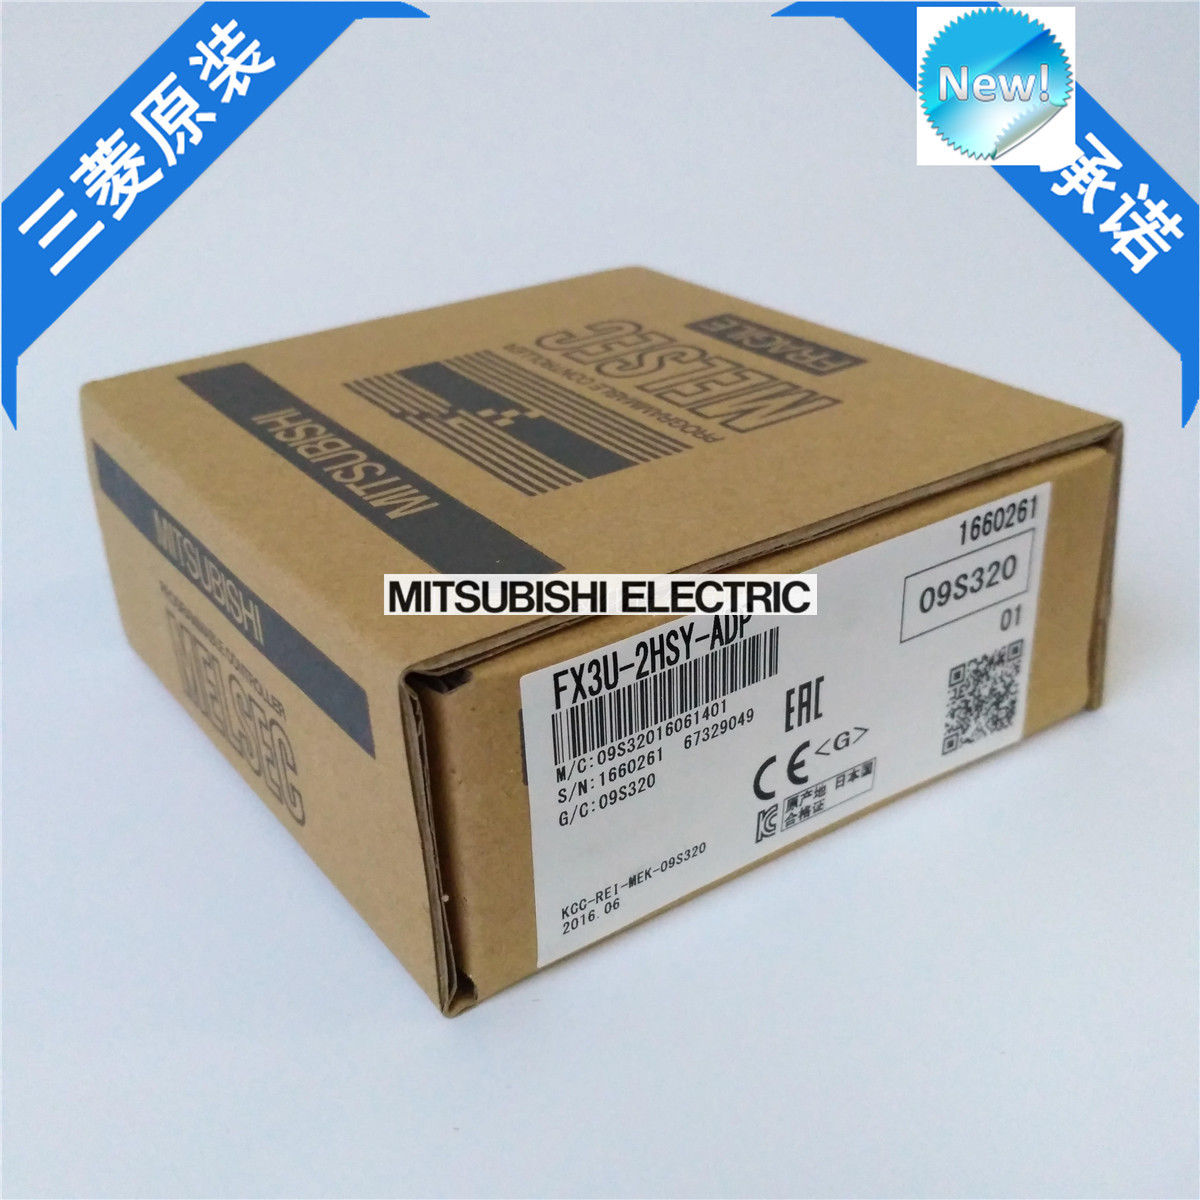 New Mitsubishi PLC FX3U-2HSY-ADP In Box FX3U2HSYADP